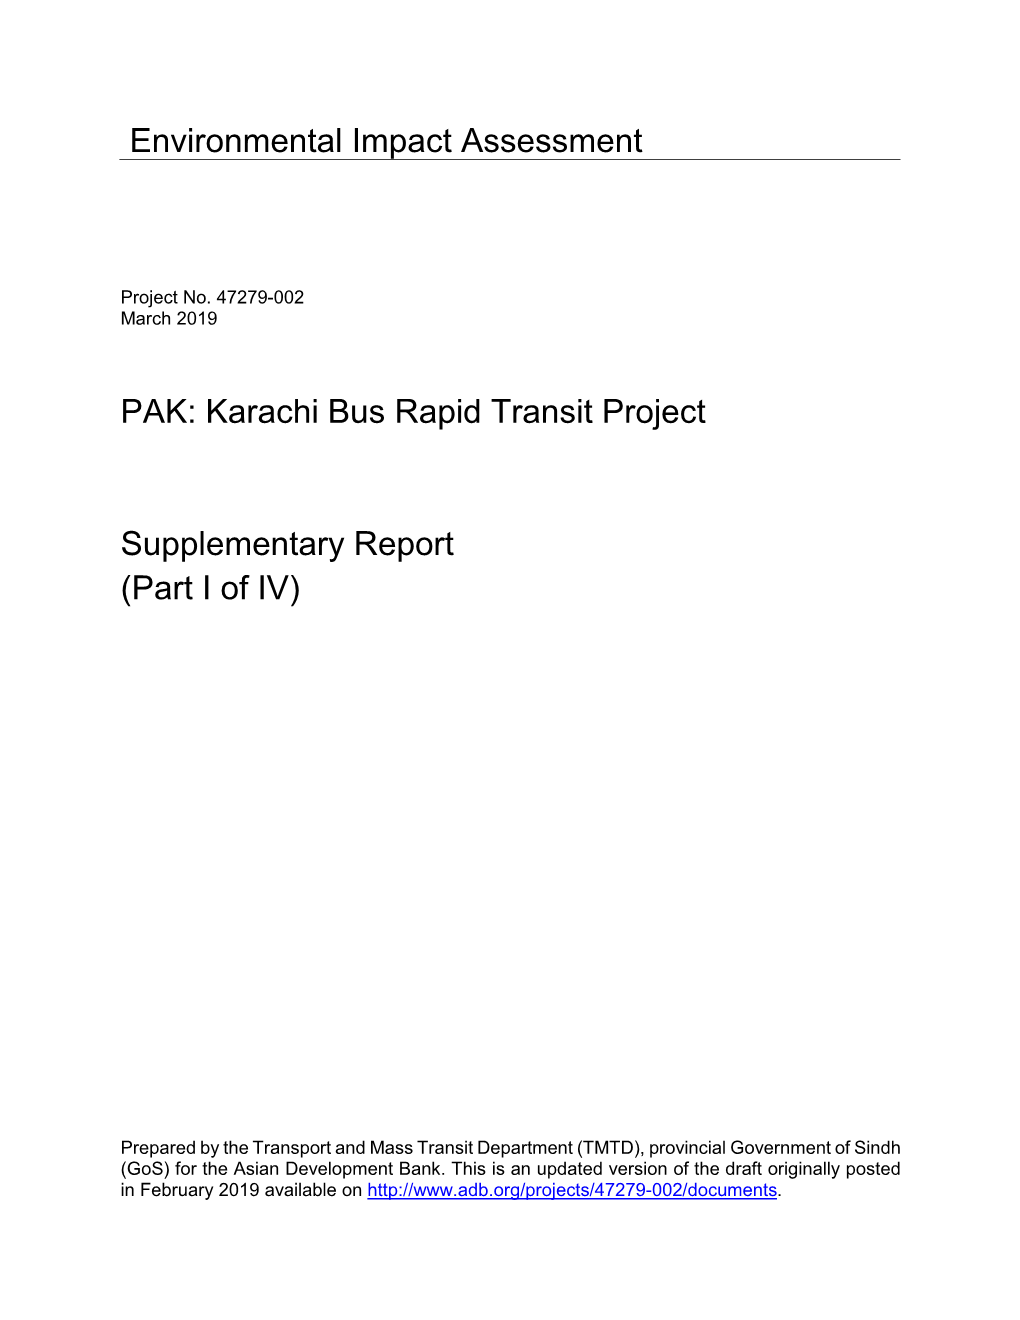 PAK: Karachi Bus Rapid Transit Project Supplementary Report